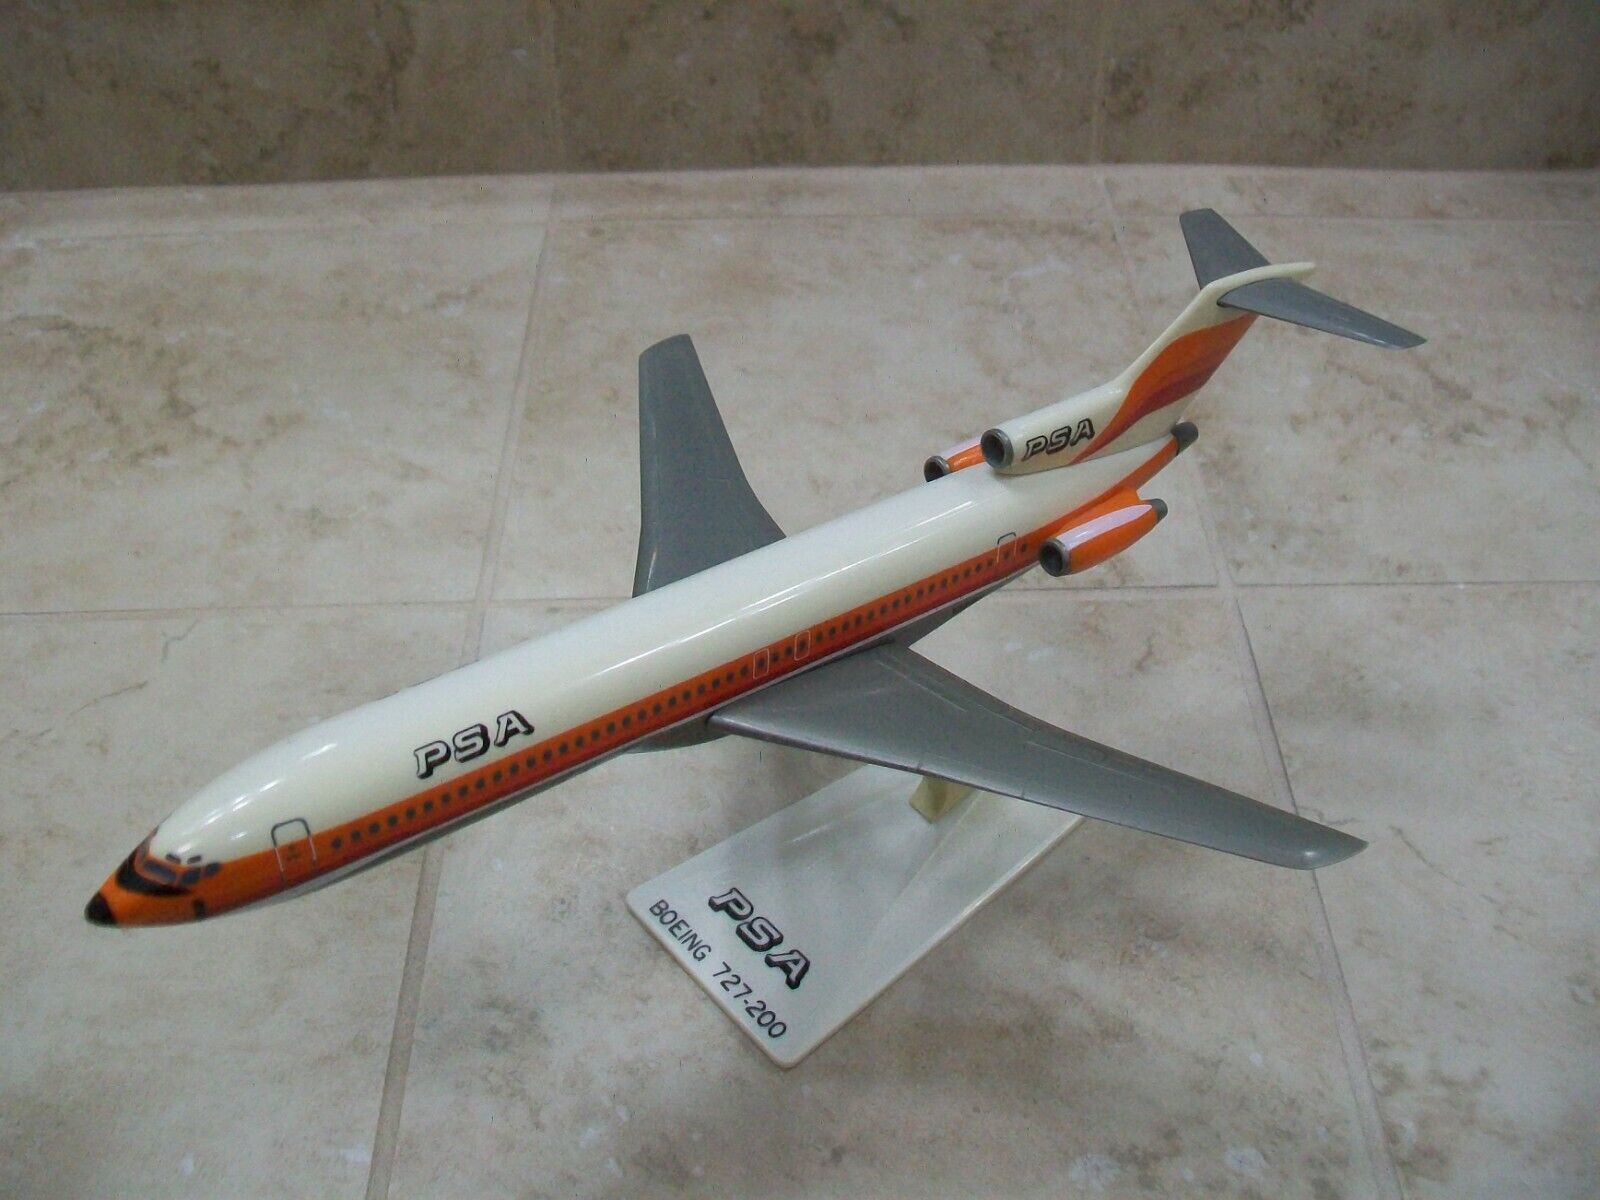 Flight Miniatures PSA 727 model plane